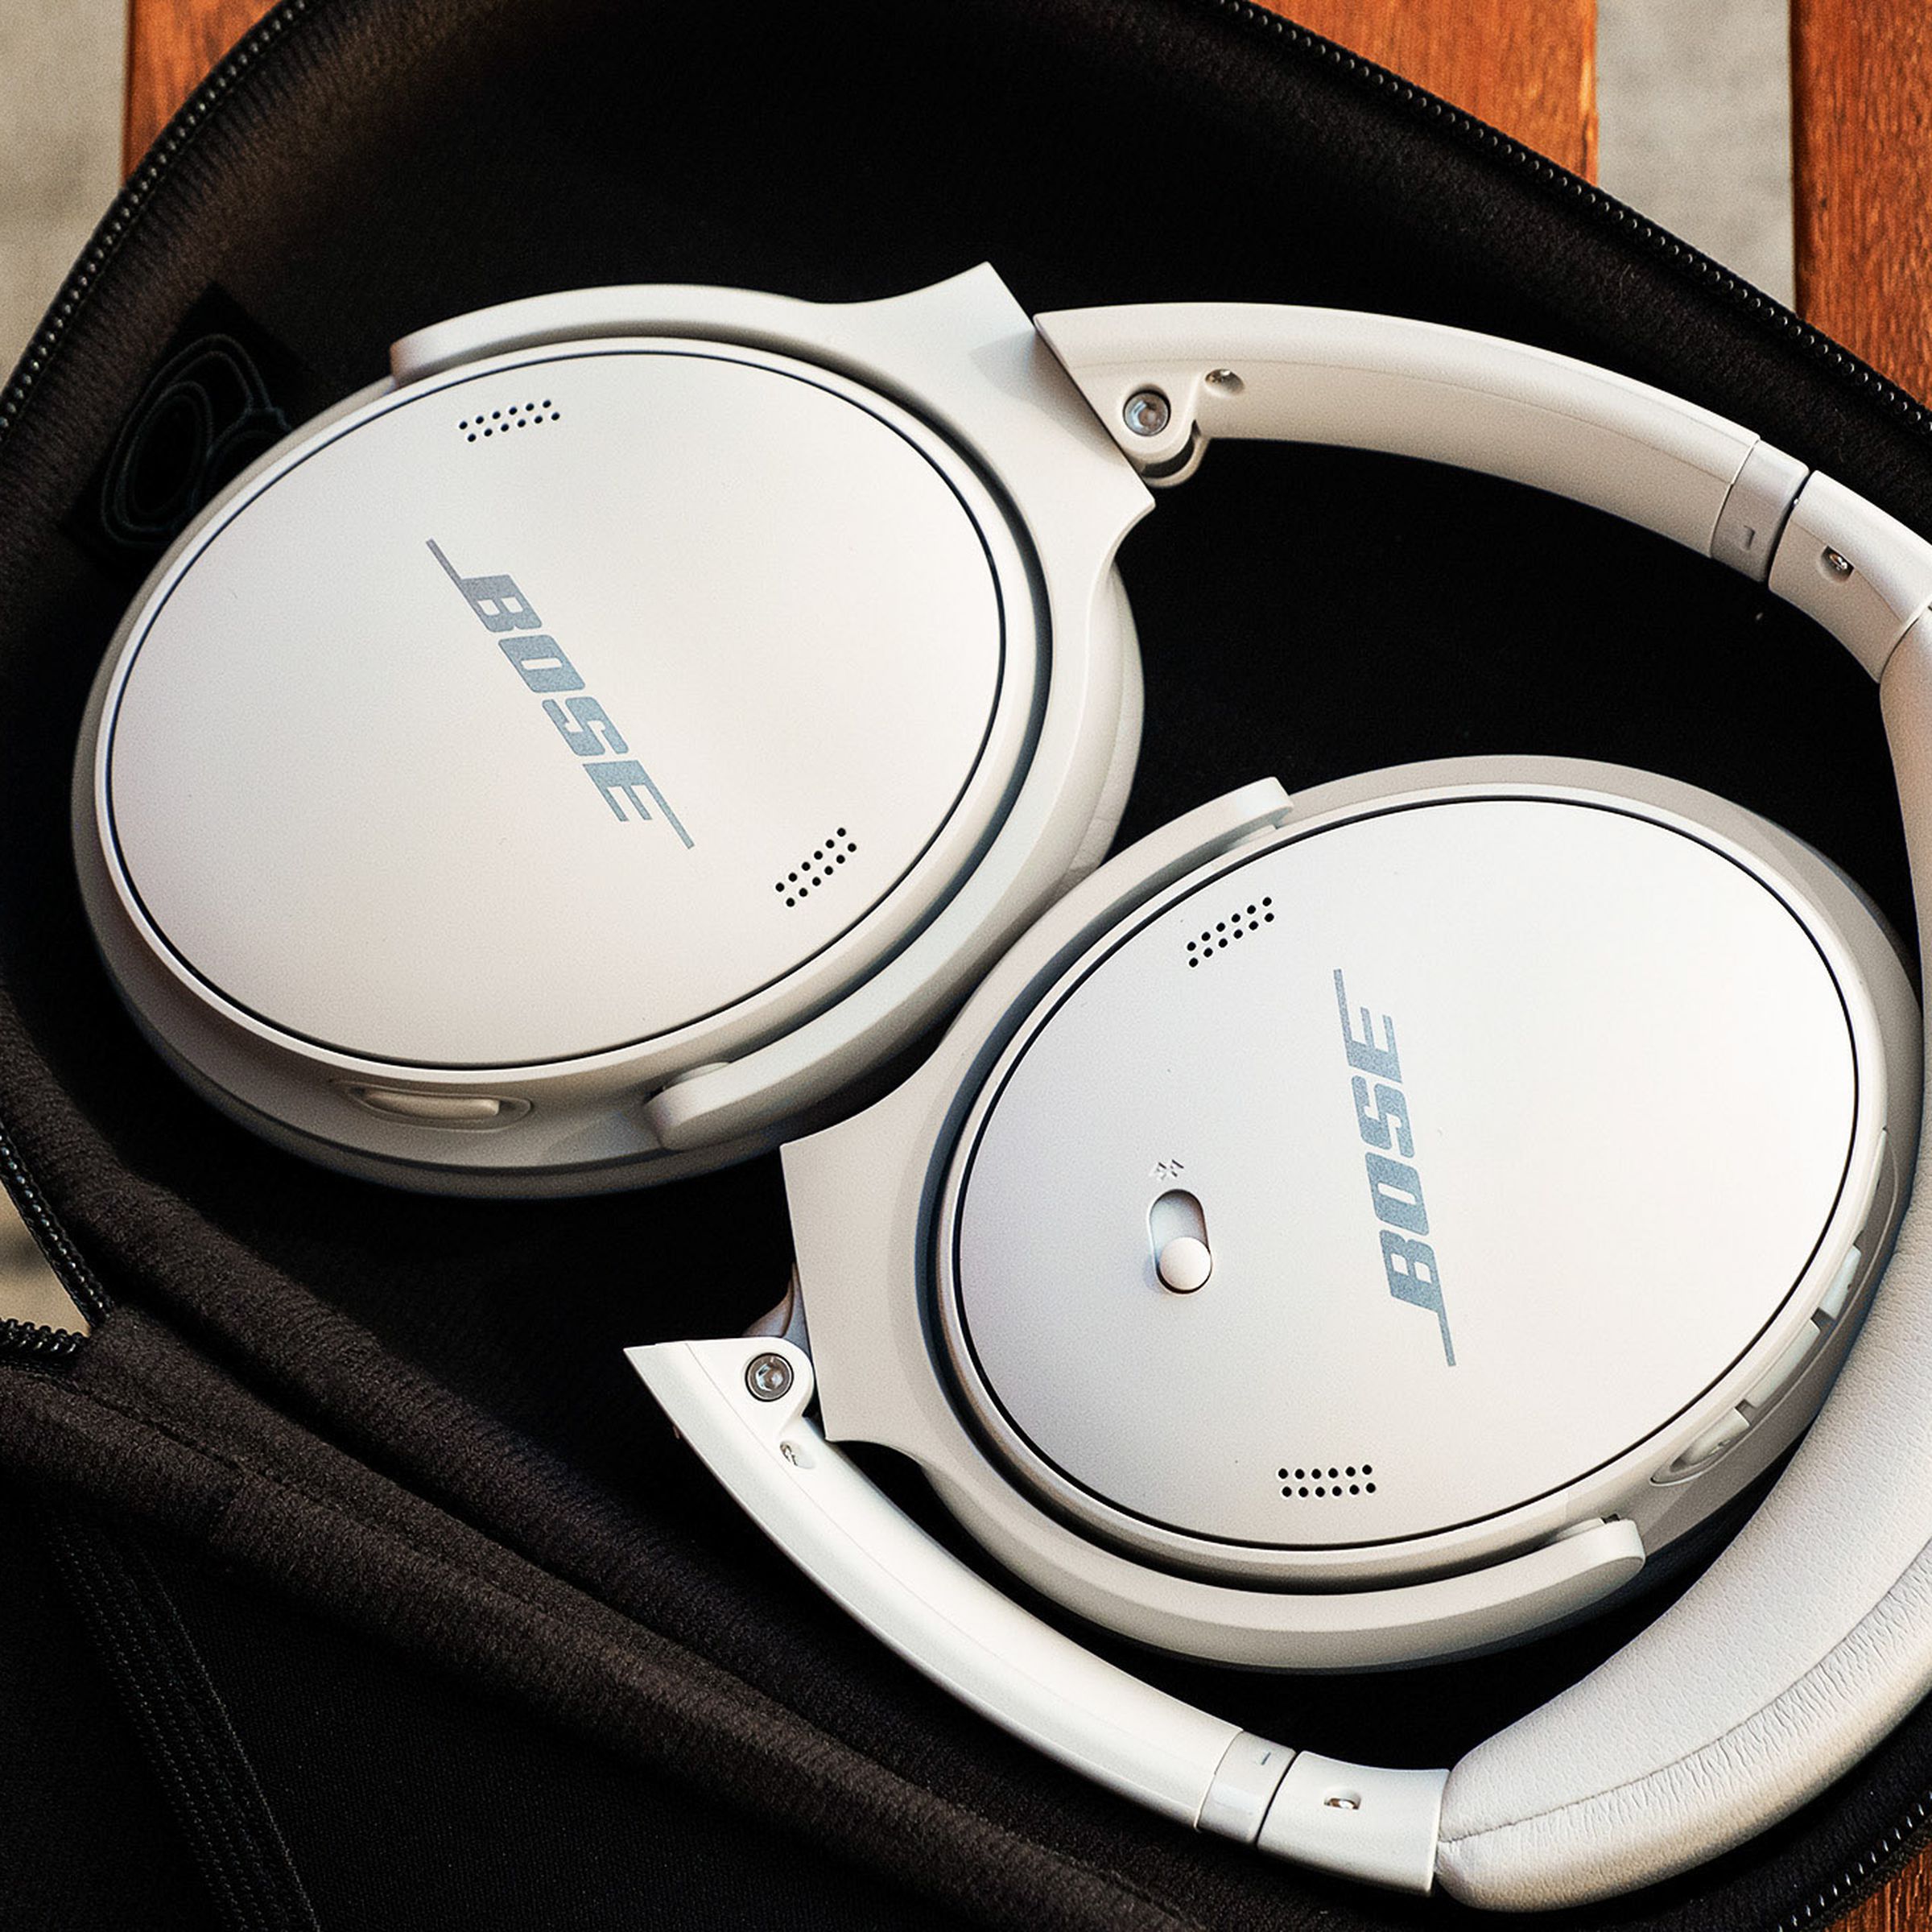 A photo of Bose’s QuietComfort 45 headphones.